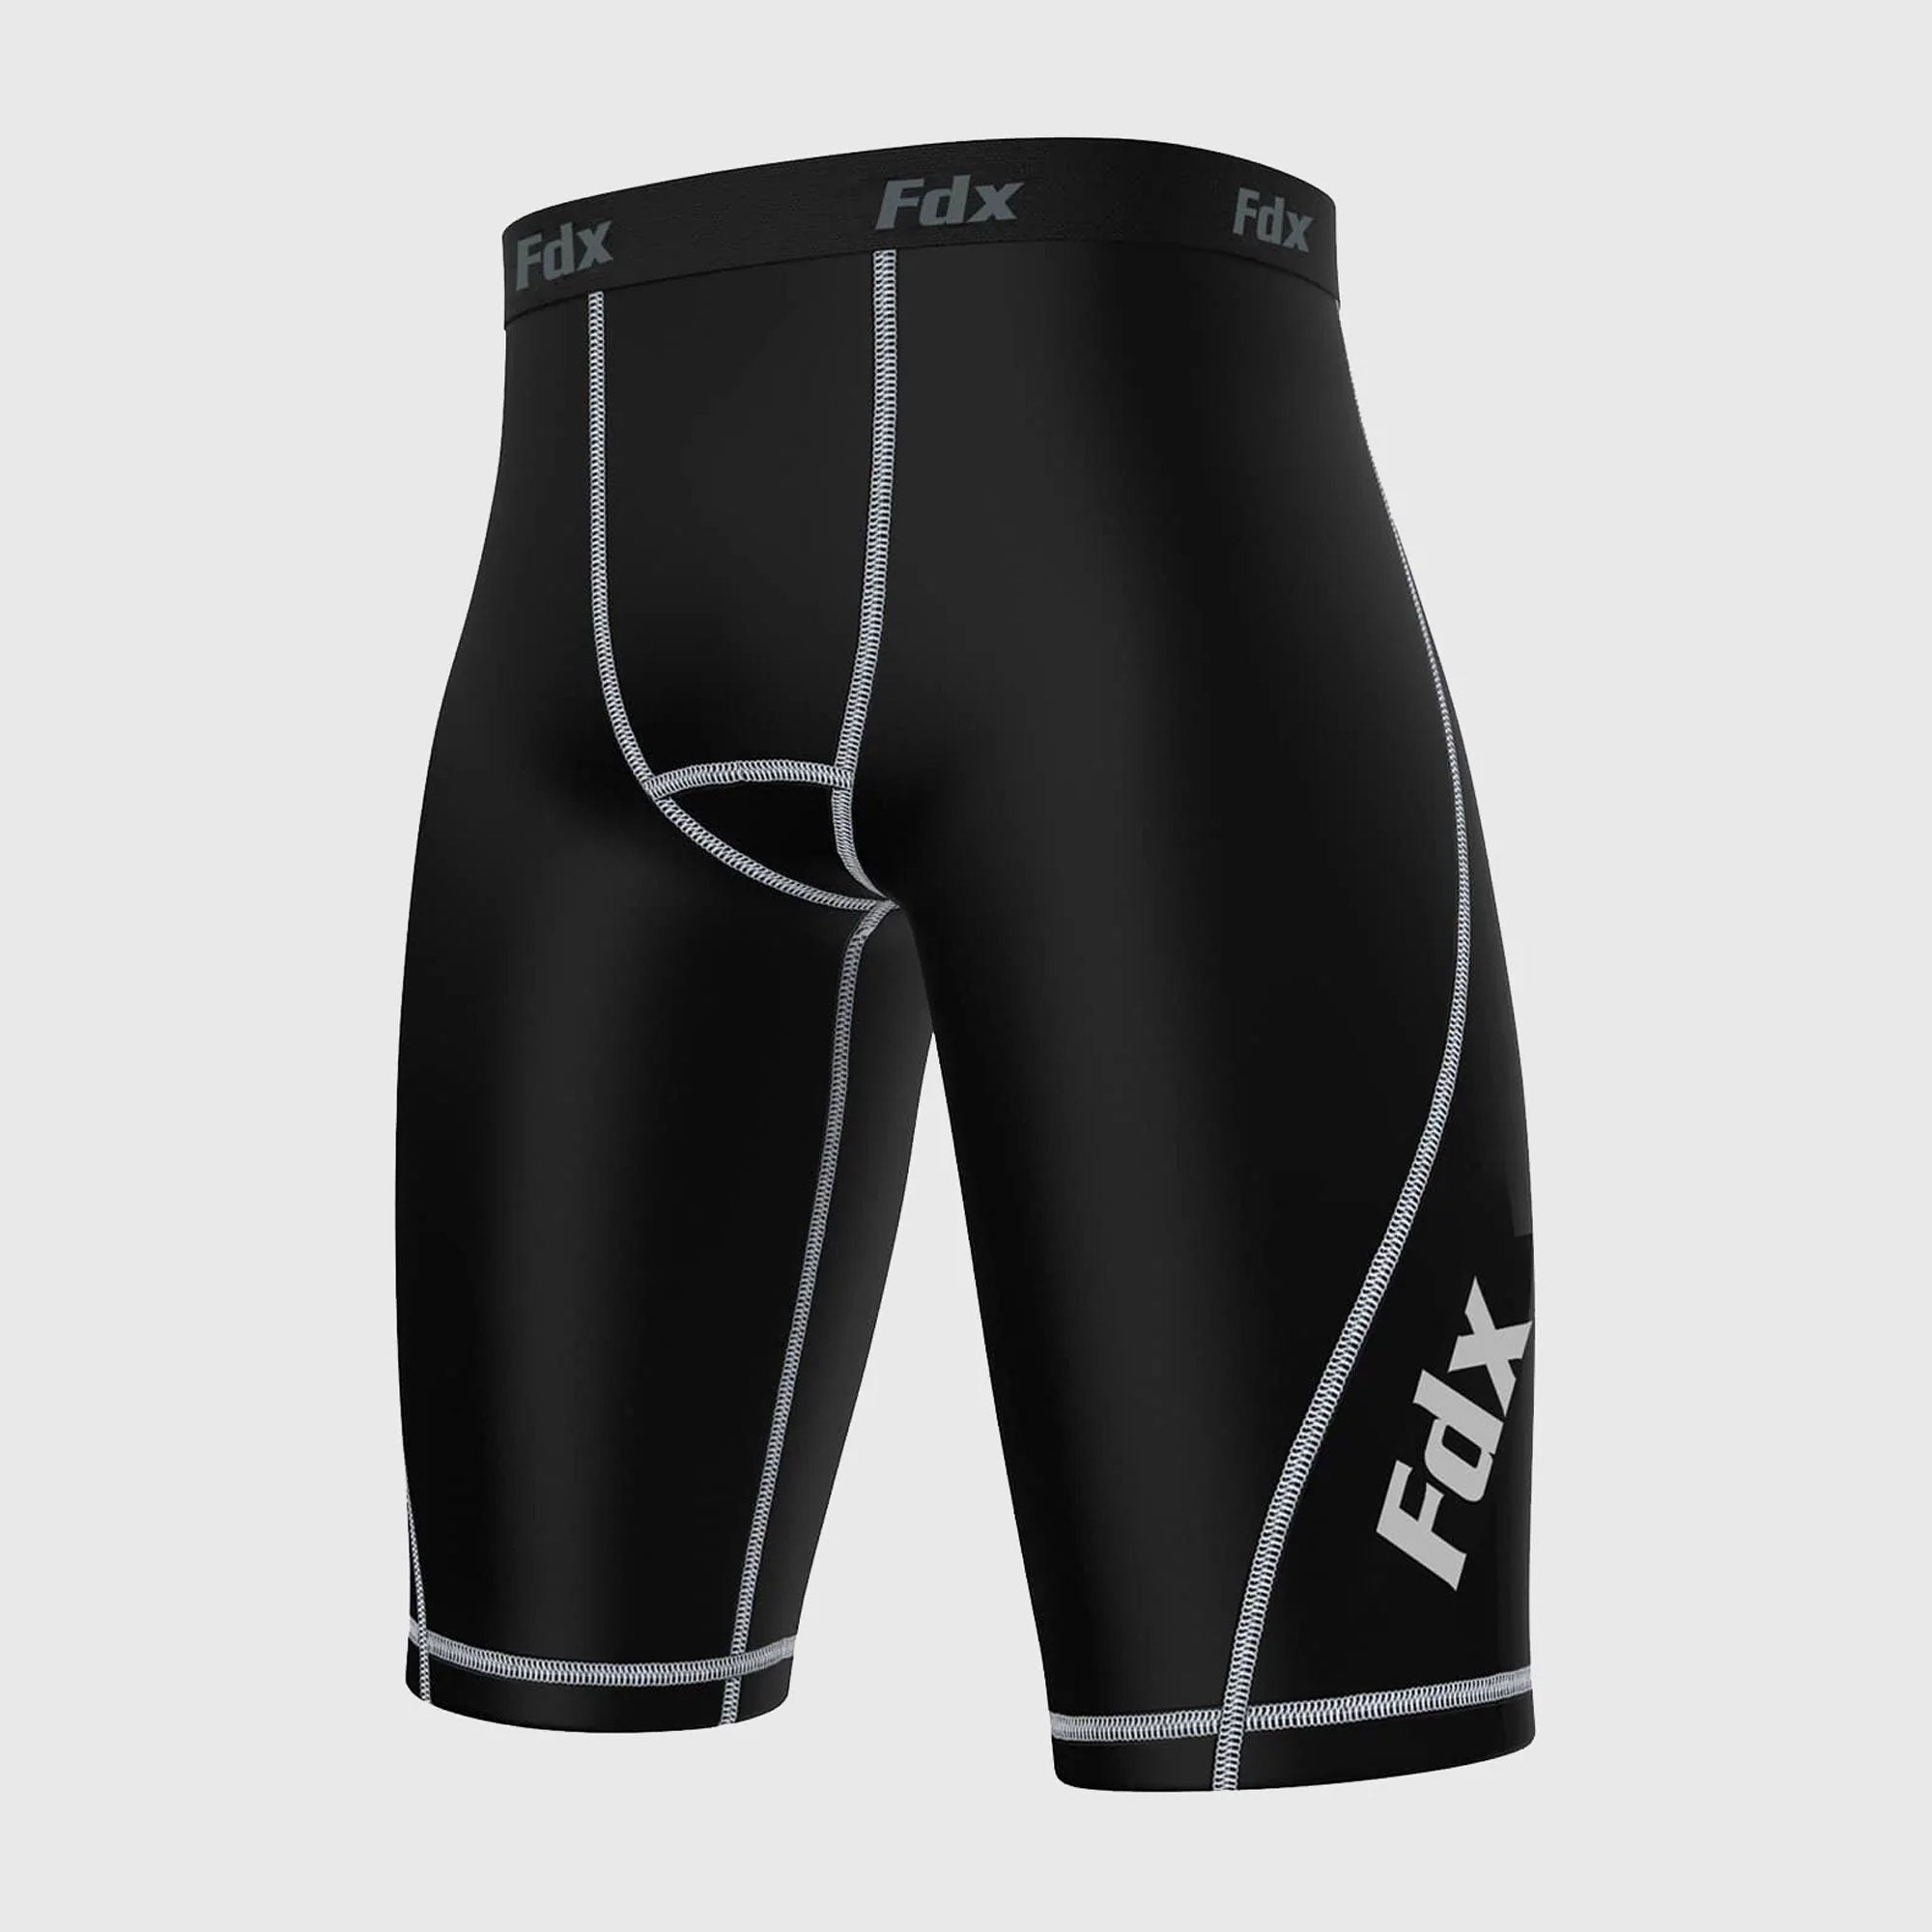 Fdx Mens Black & Grey Compression Shorts Gym Workout Running Athletic Yoga Elastic Waistband Stretchable Breathable